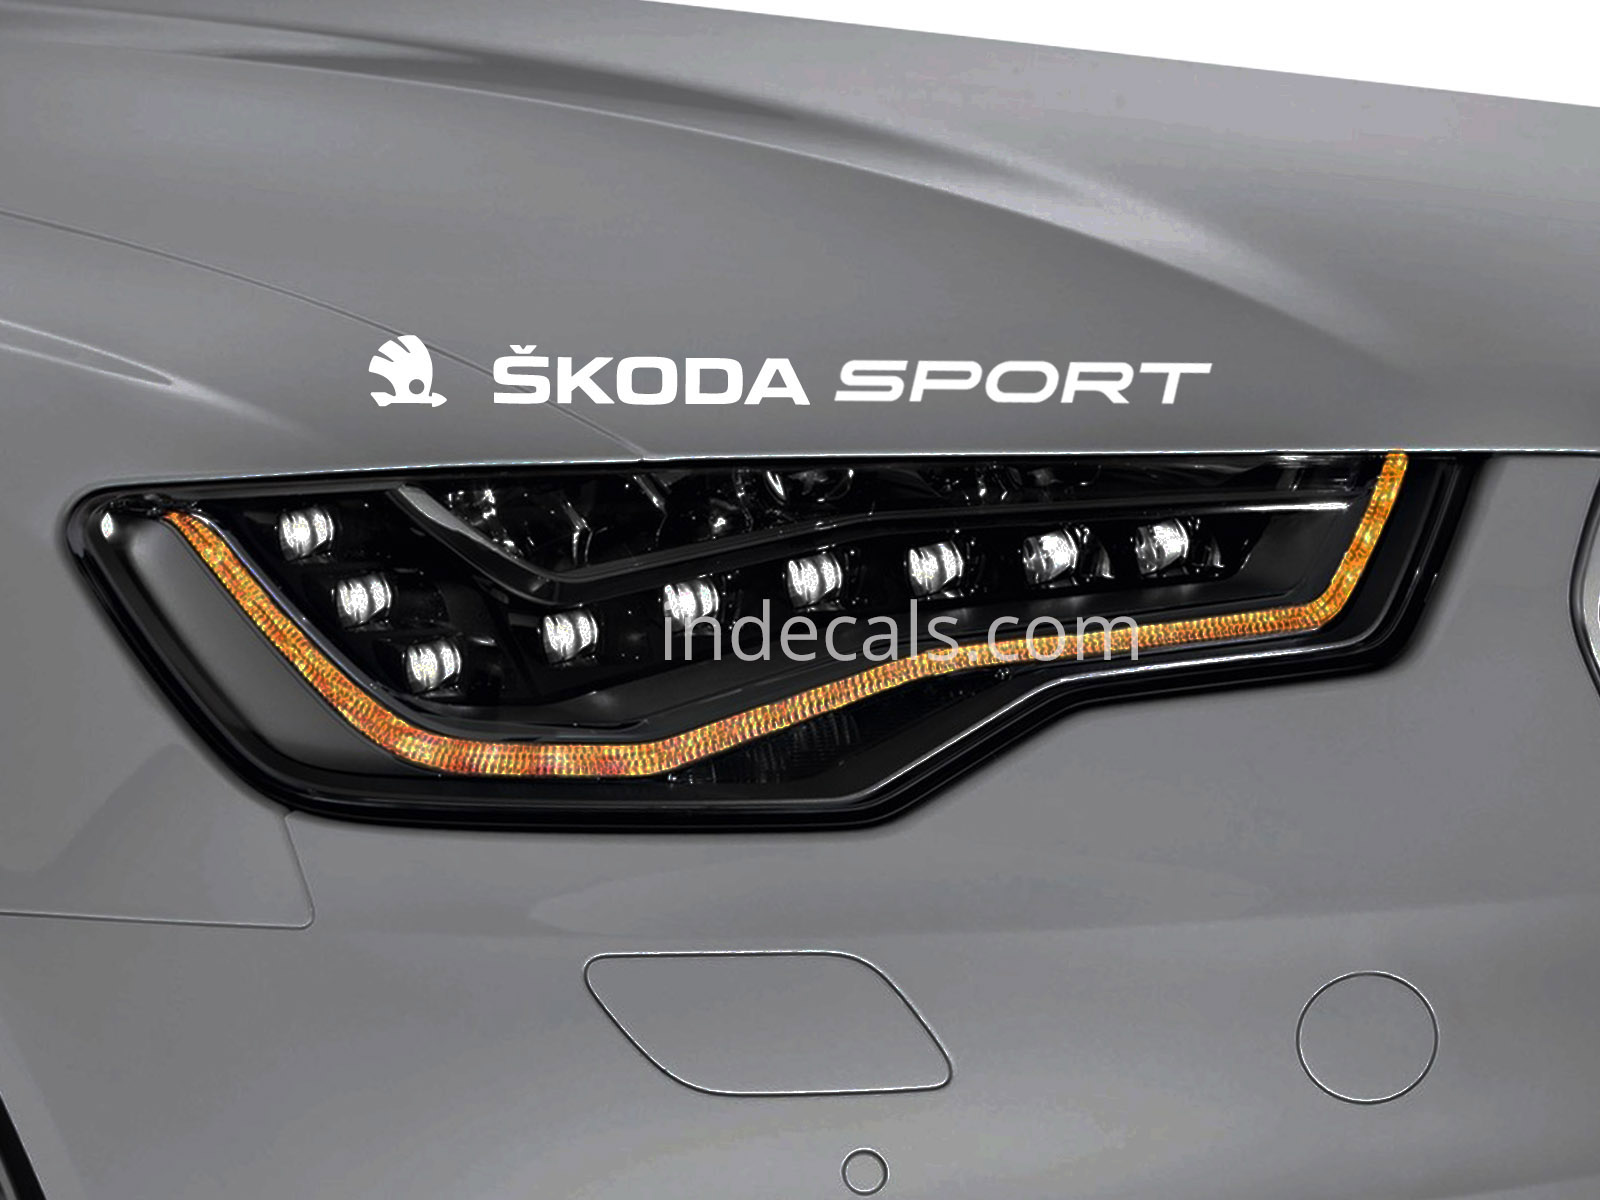 1 x Skoda Sport Sticker for Eyebrow - White